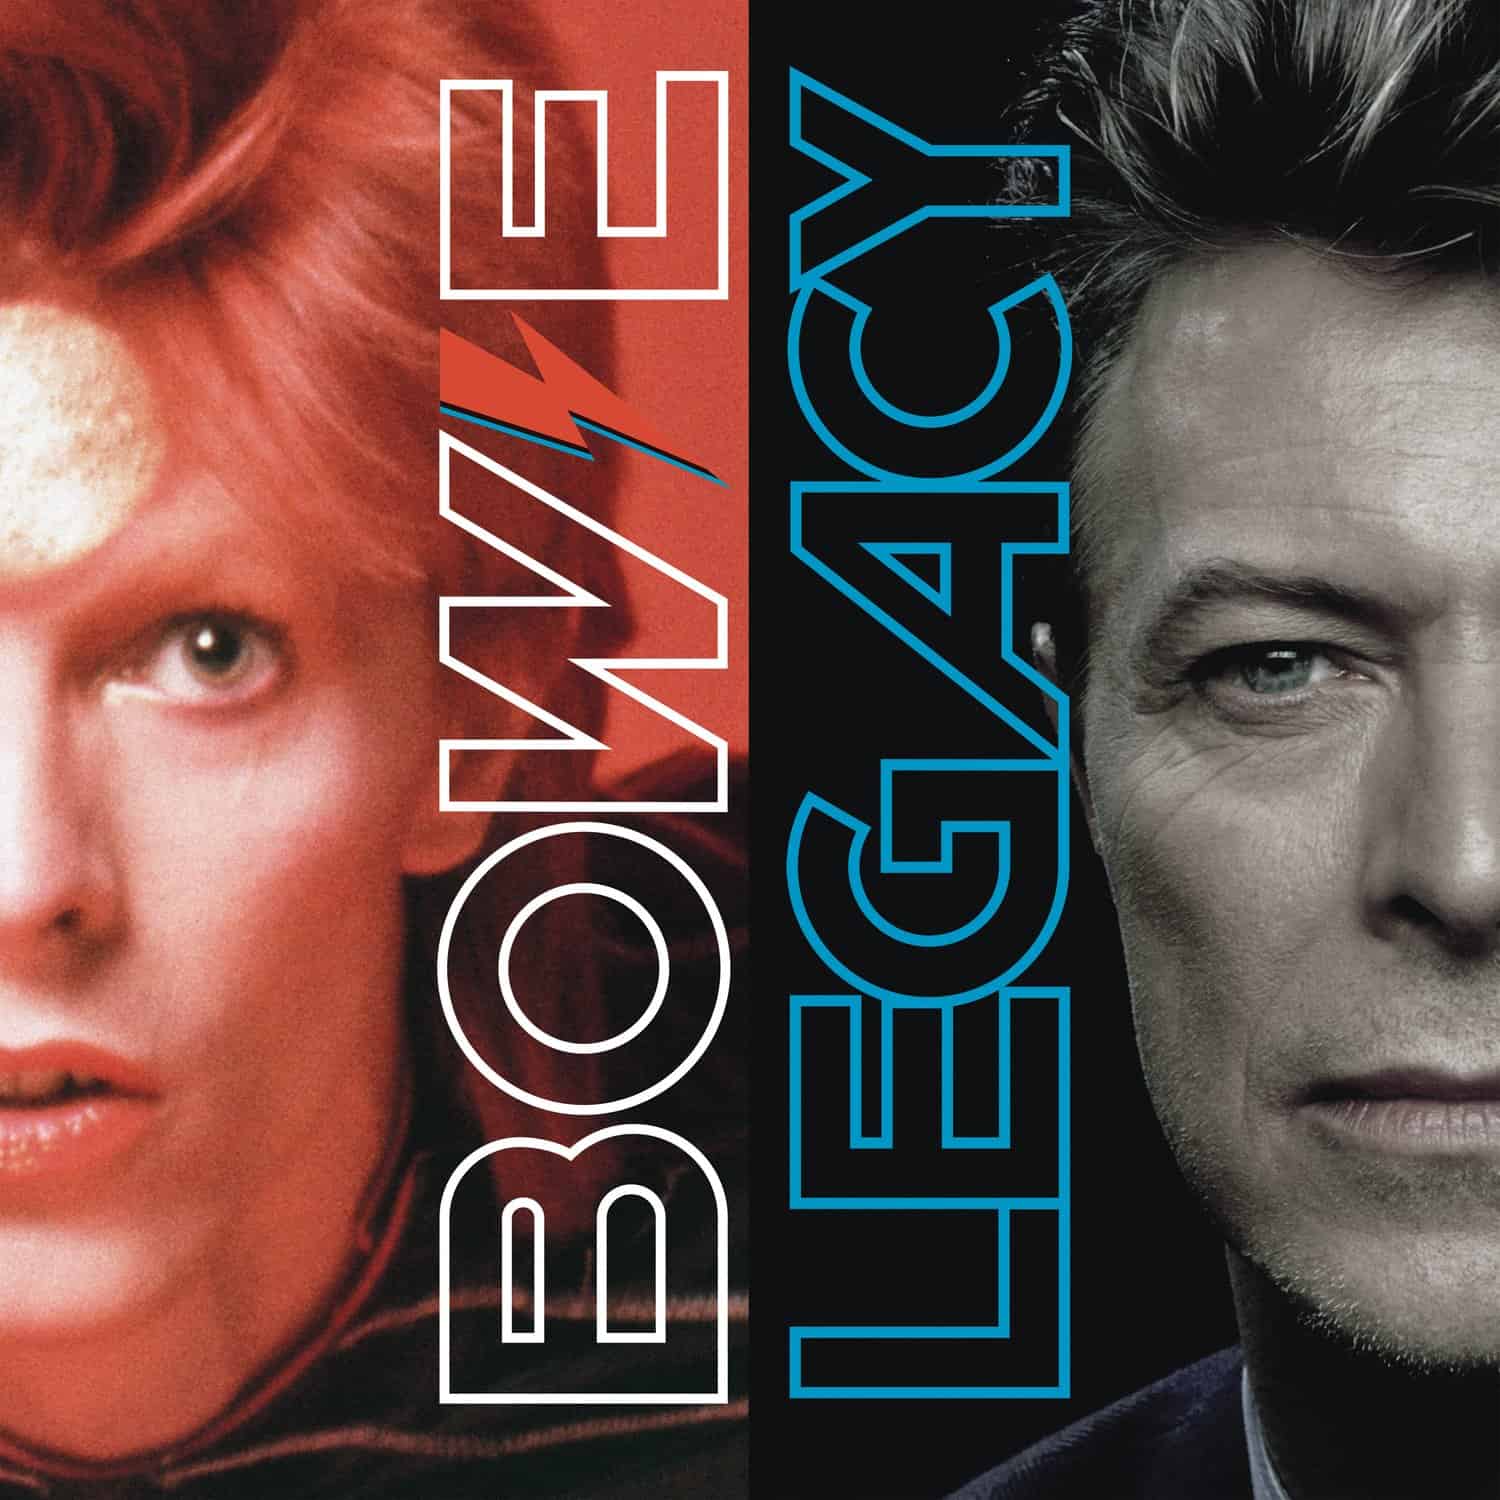 David-Bowie-Legacy-vinyl-record-album1